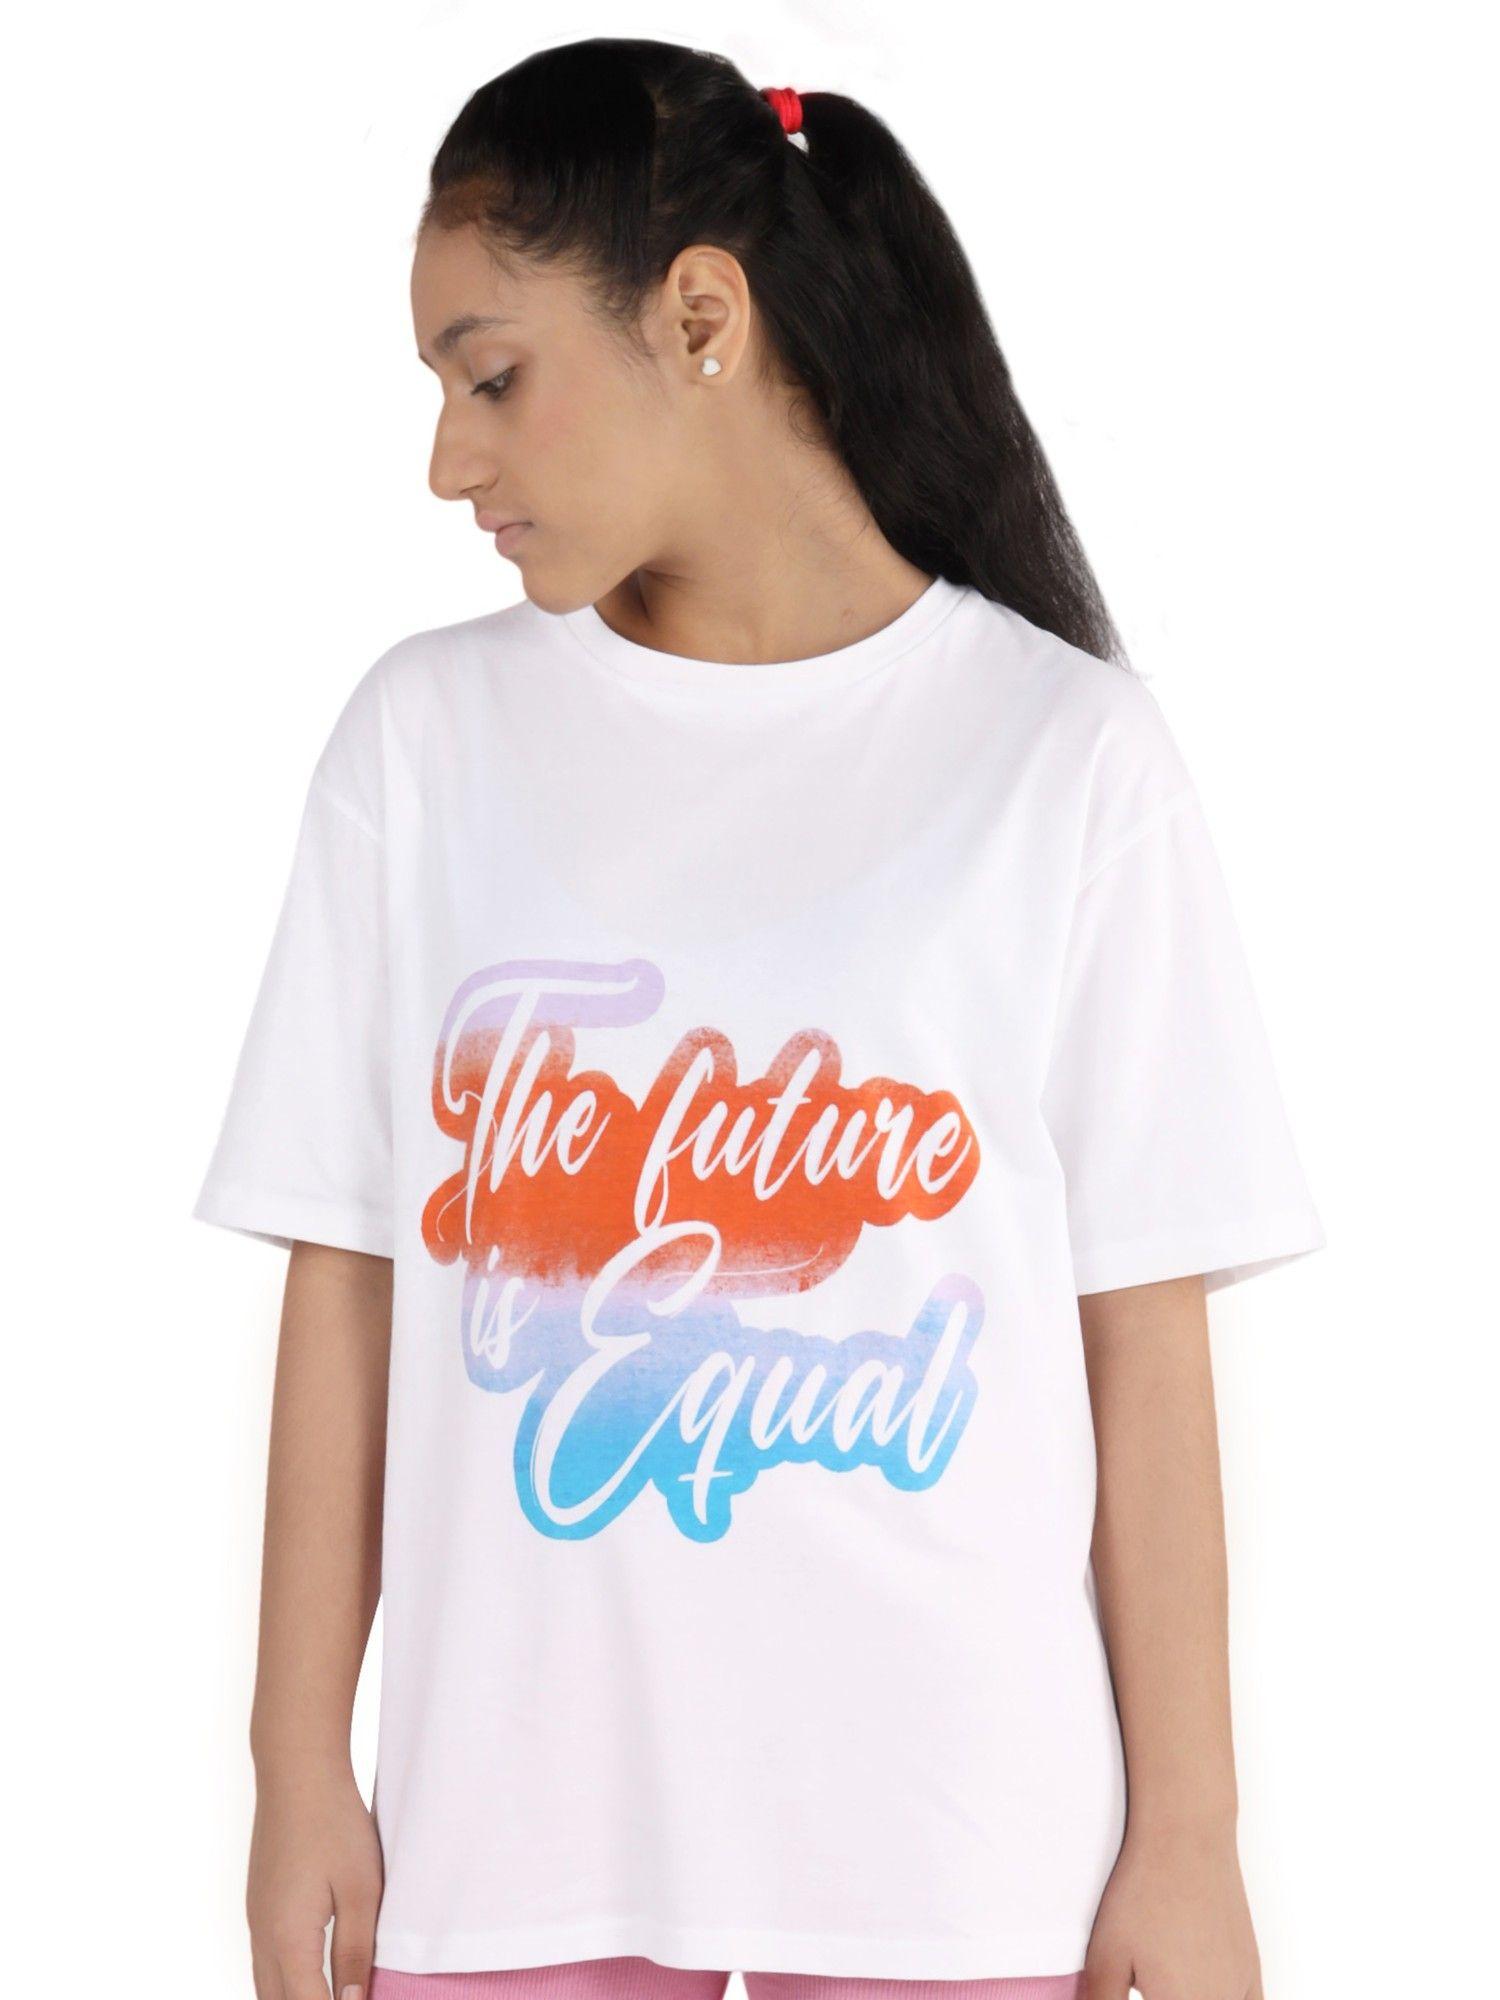 girls-white-t-shirt-printed